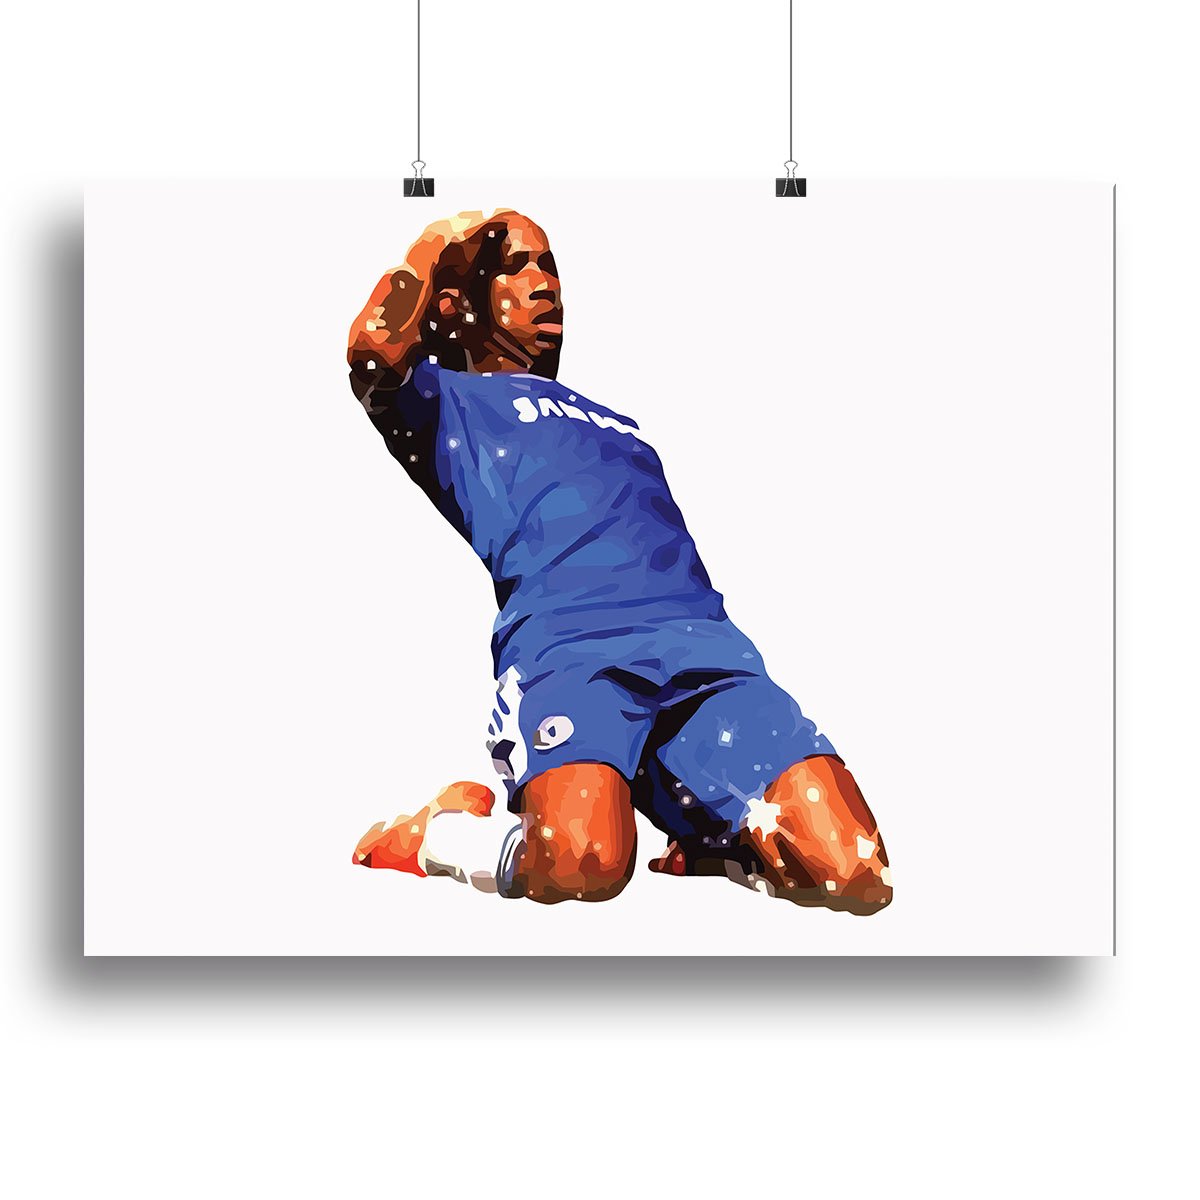 Didier Drogba Goalscorer Canvas Print or Poster